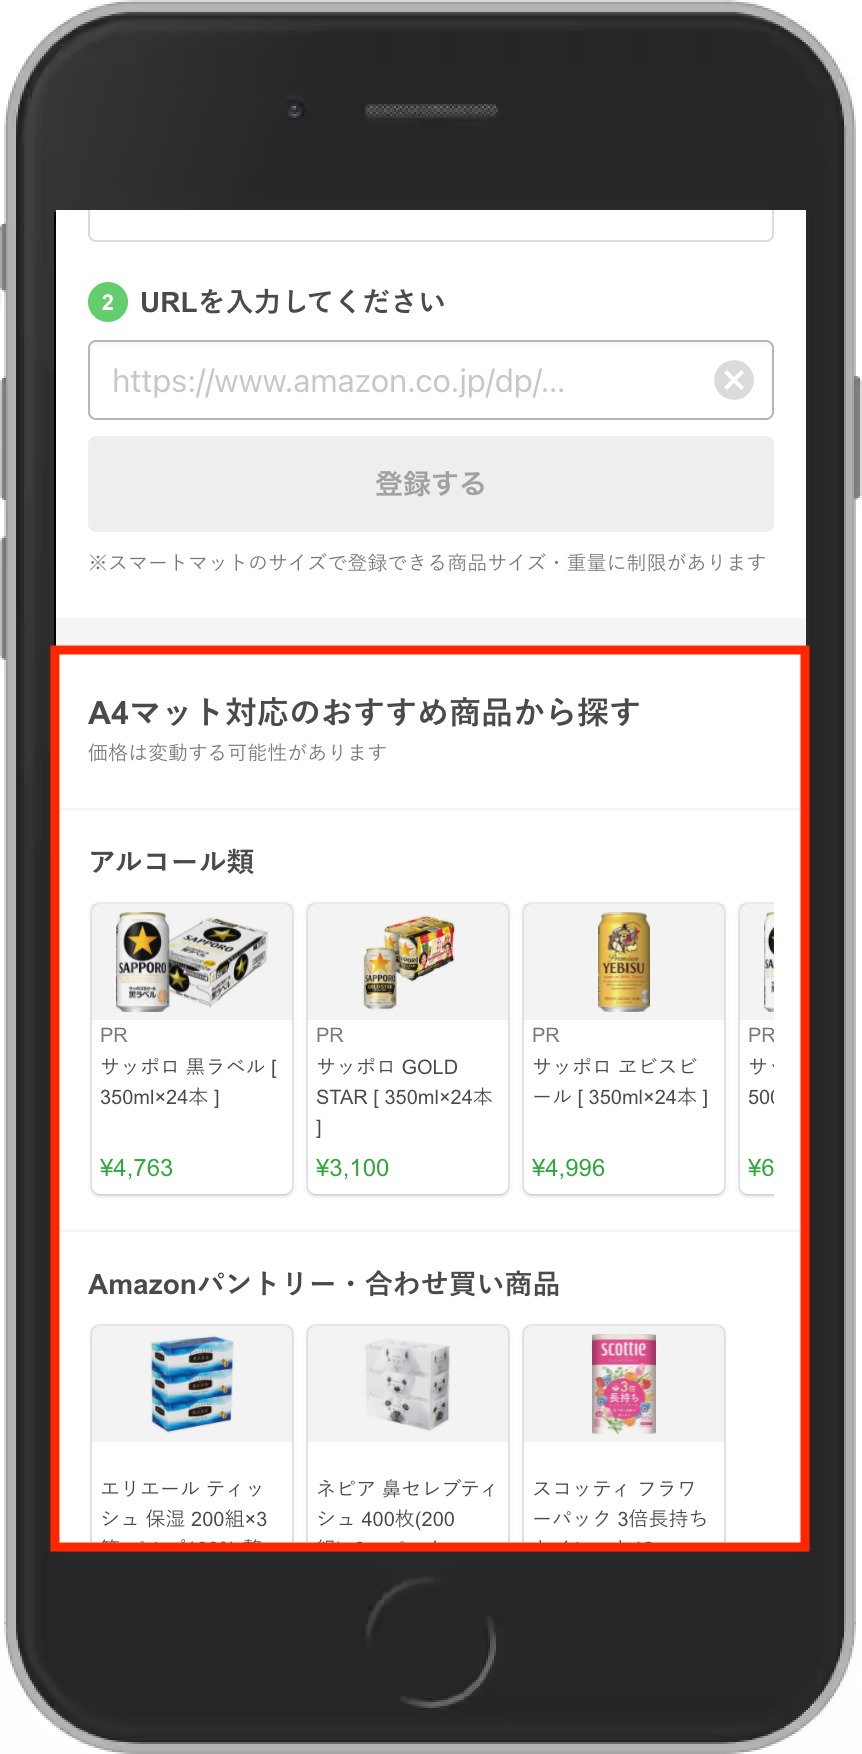 lite.smartmat.io subscription regist time to buy(iPhone 6 7 8) (1)